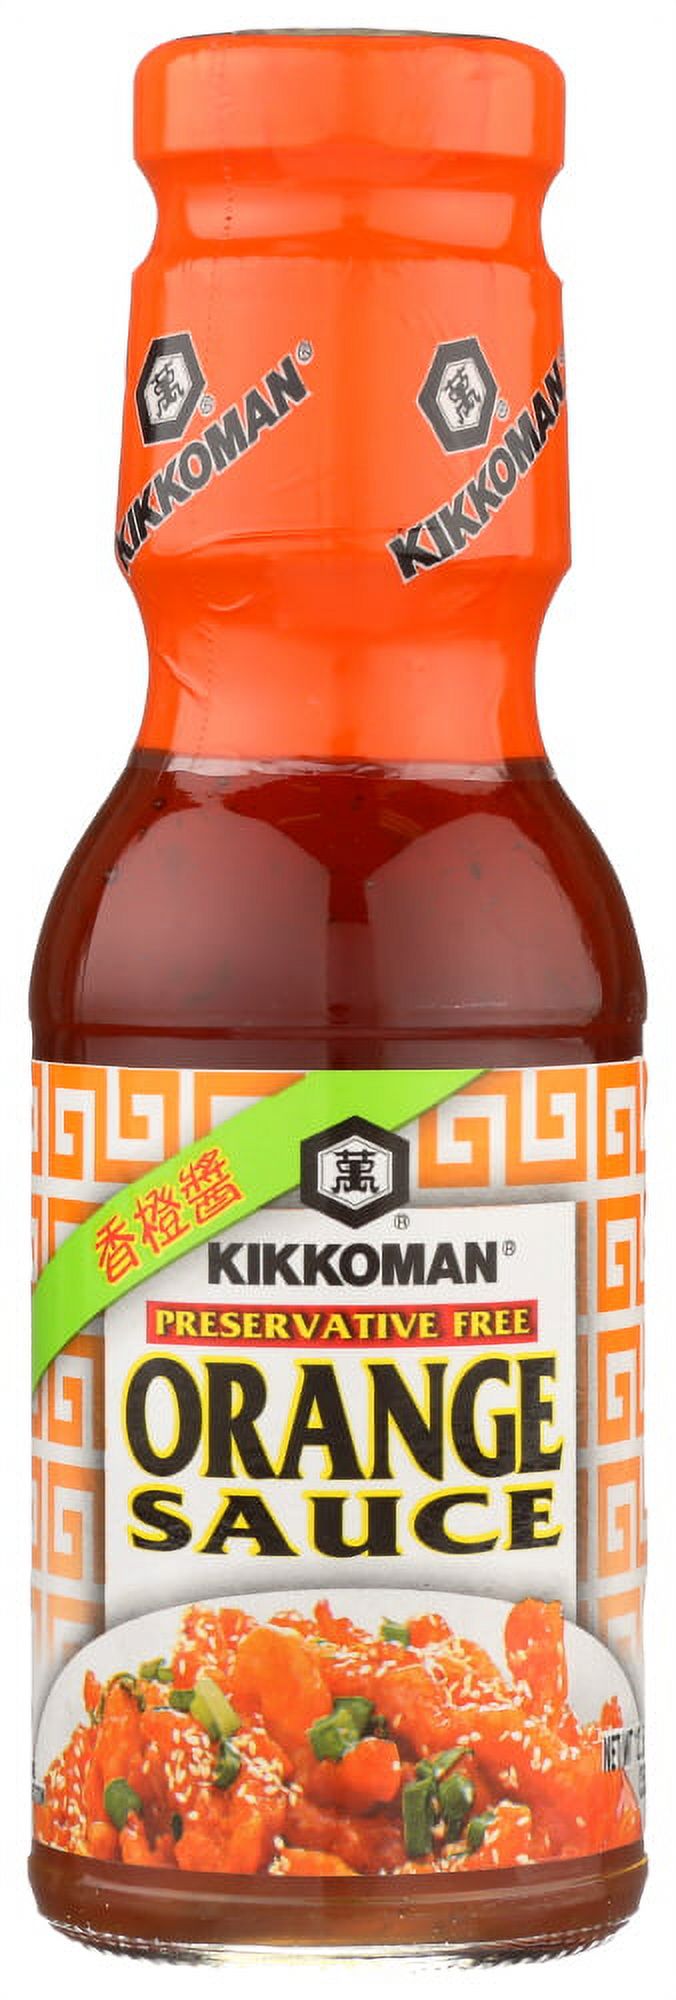 Kikkoman Sauce Orange Preservative Free, 12.5 Oz - image 1 of 2